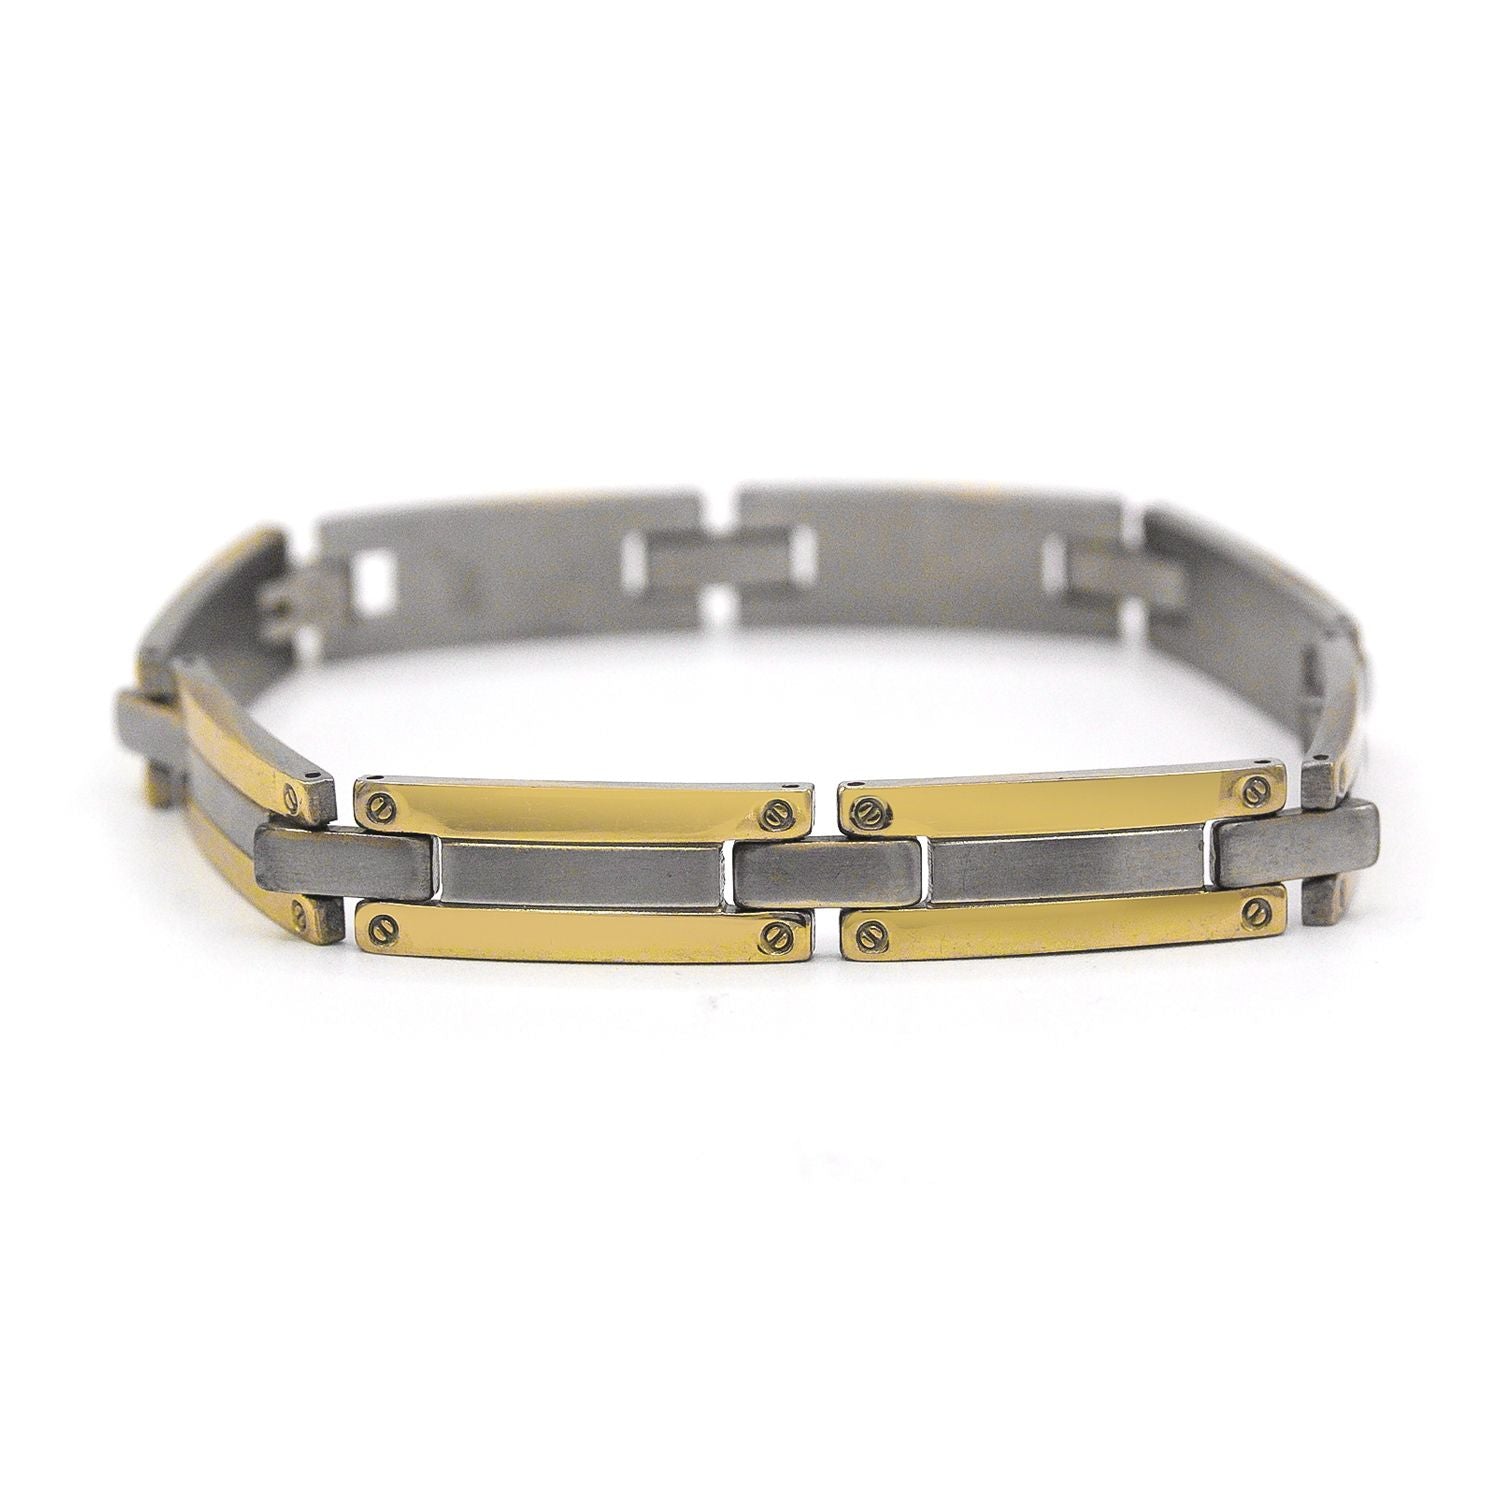 Cubic Zirconia Men's Bracelet 14K Gold Plated Wrist Band Fashion Jewelry 8.5"